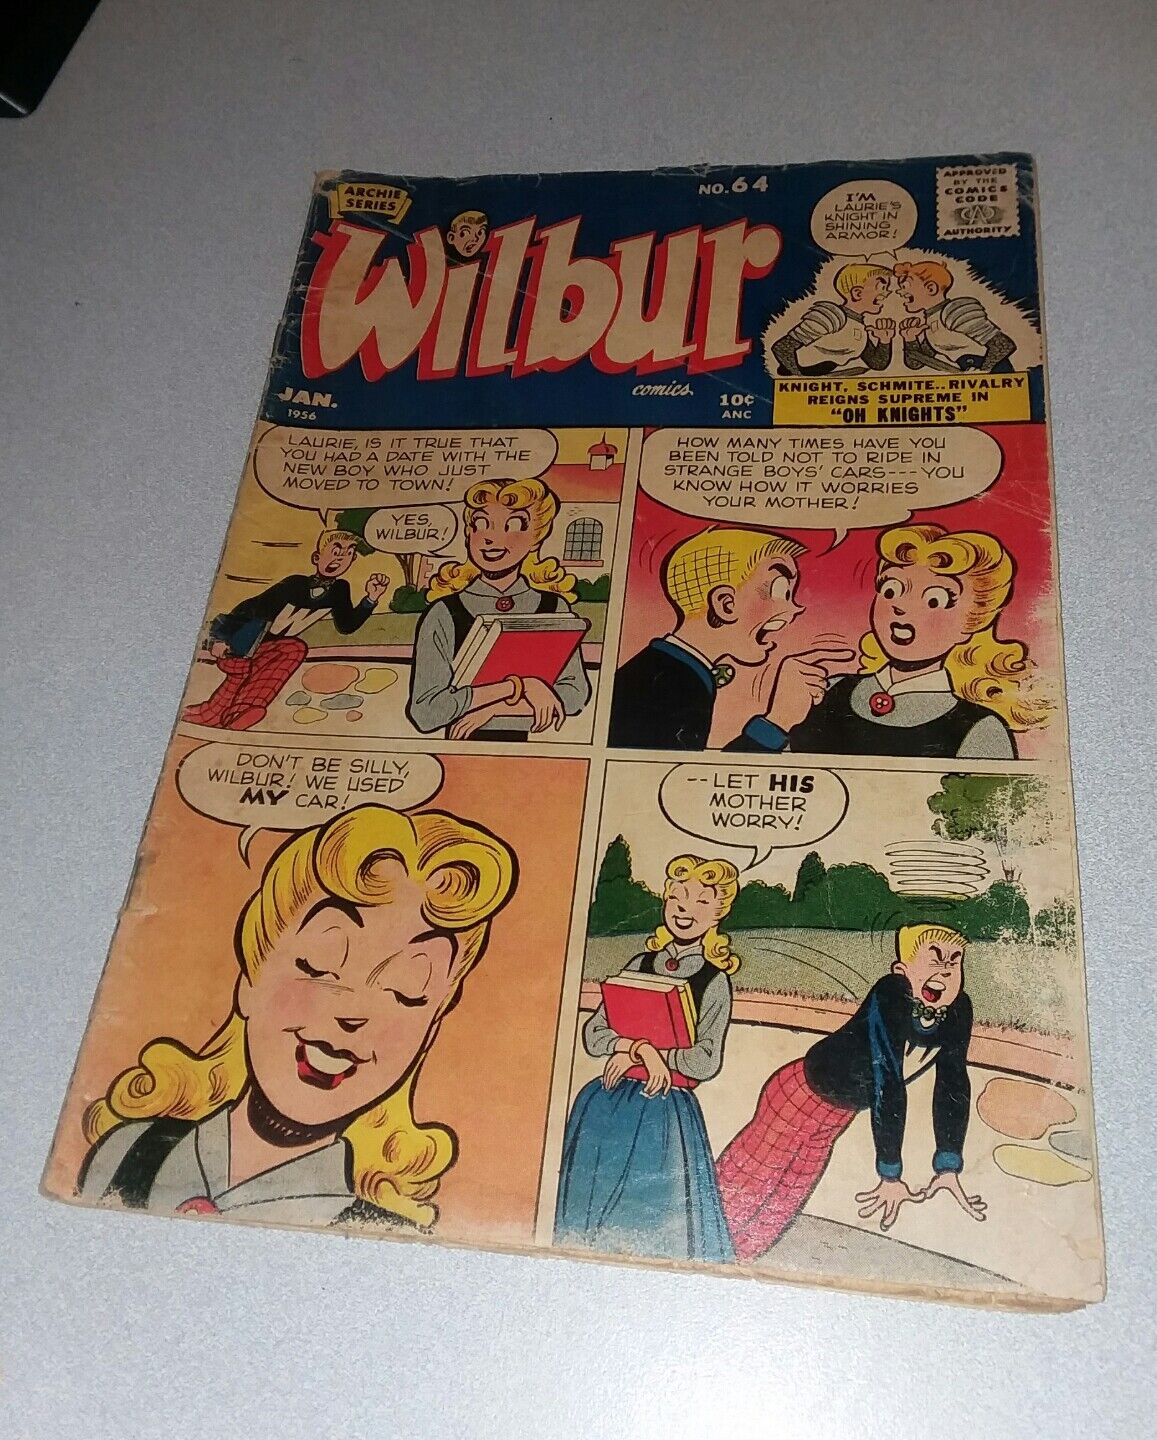 WILBUR #64 mlj 1956 ARCHIE COMICS SERIES golden age teen humor gga katy keene th